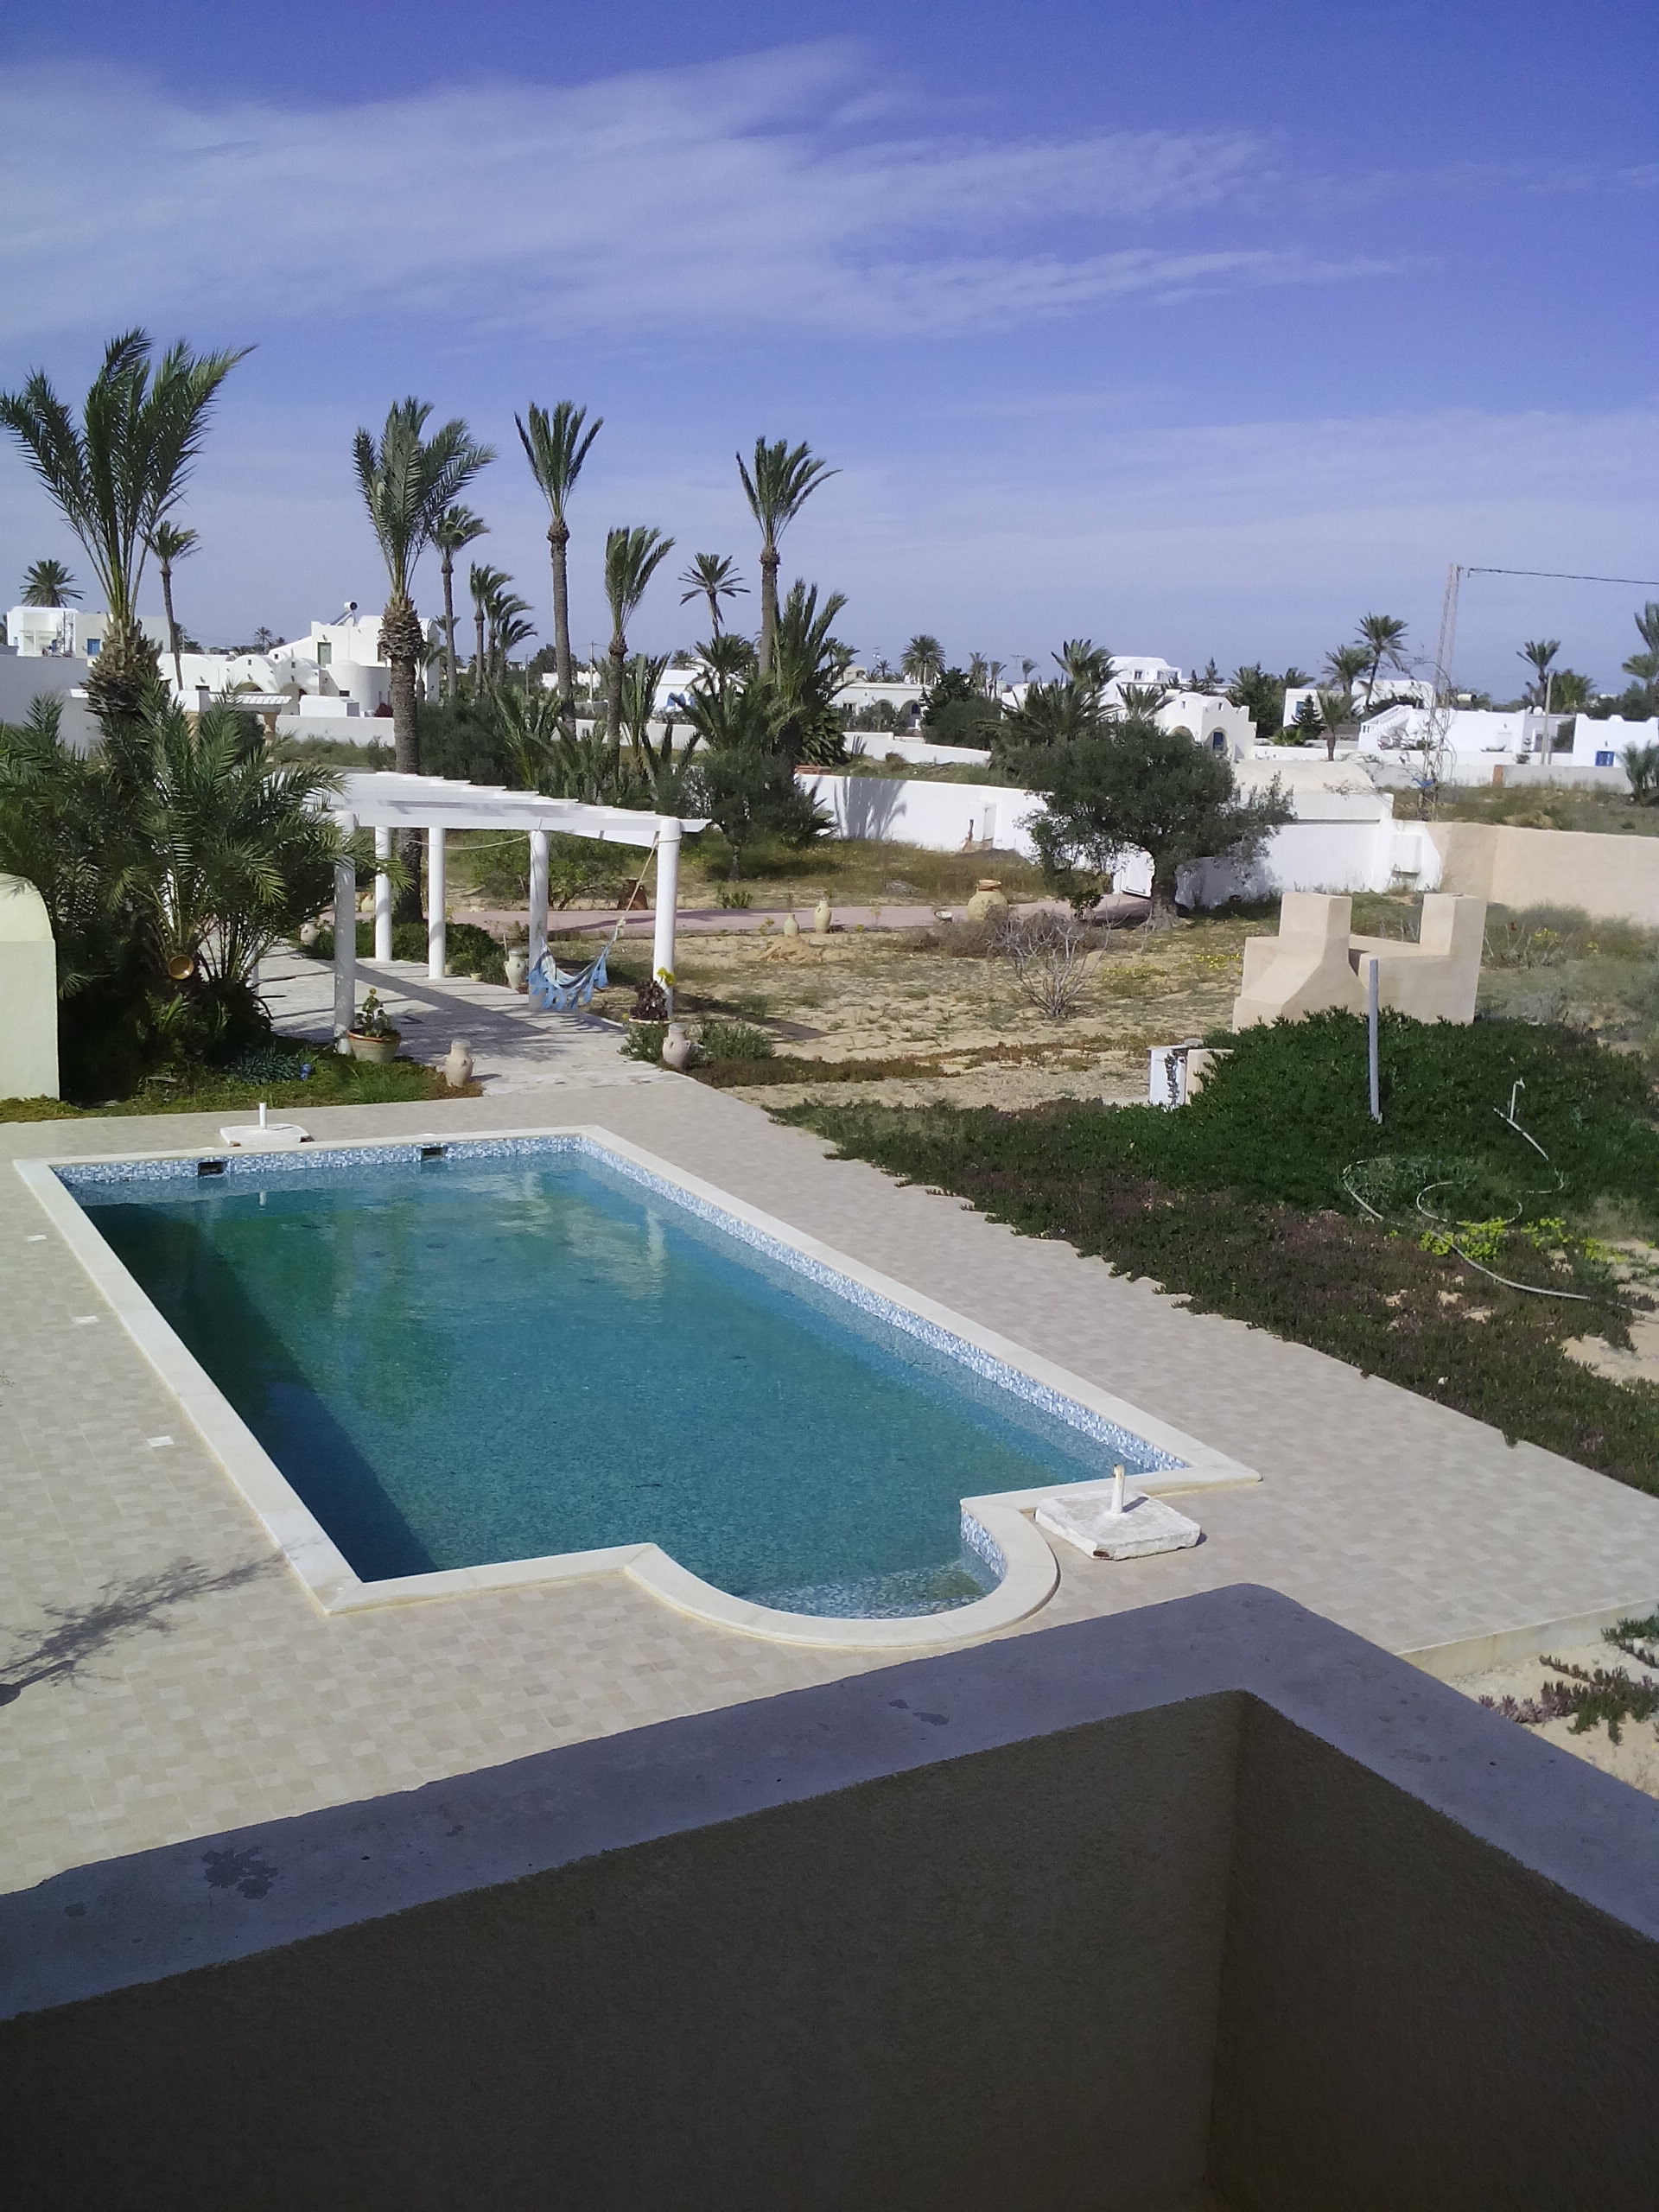 Djerba - Midoun Zone Hoteliere Location vacances Maisons Villa avec piscine partagee